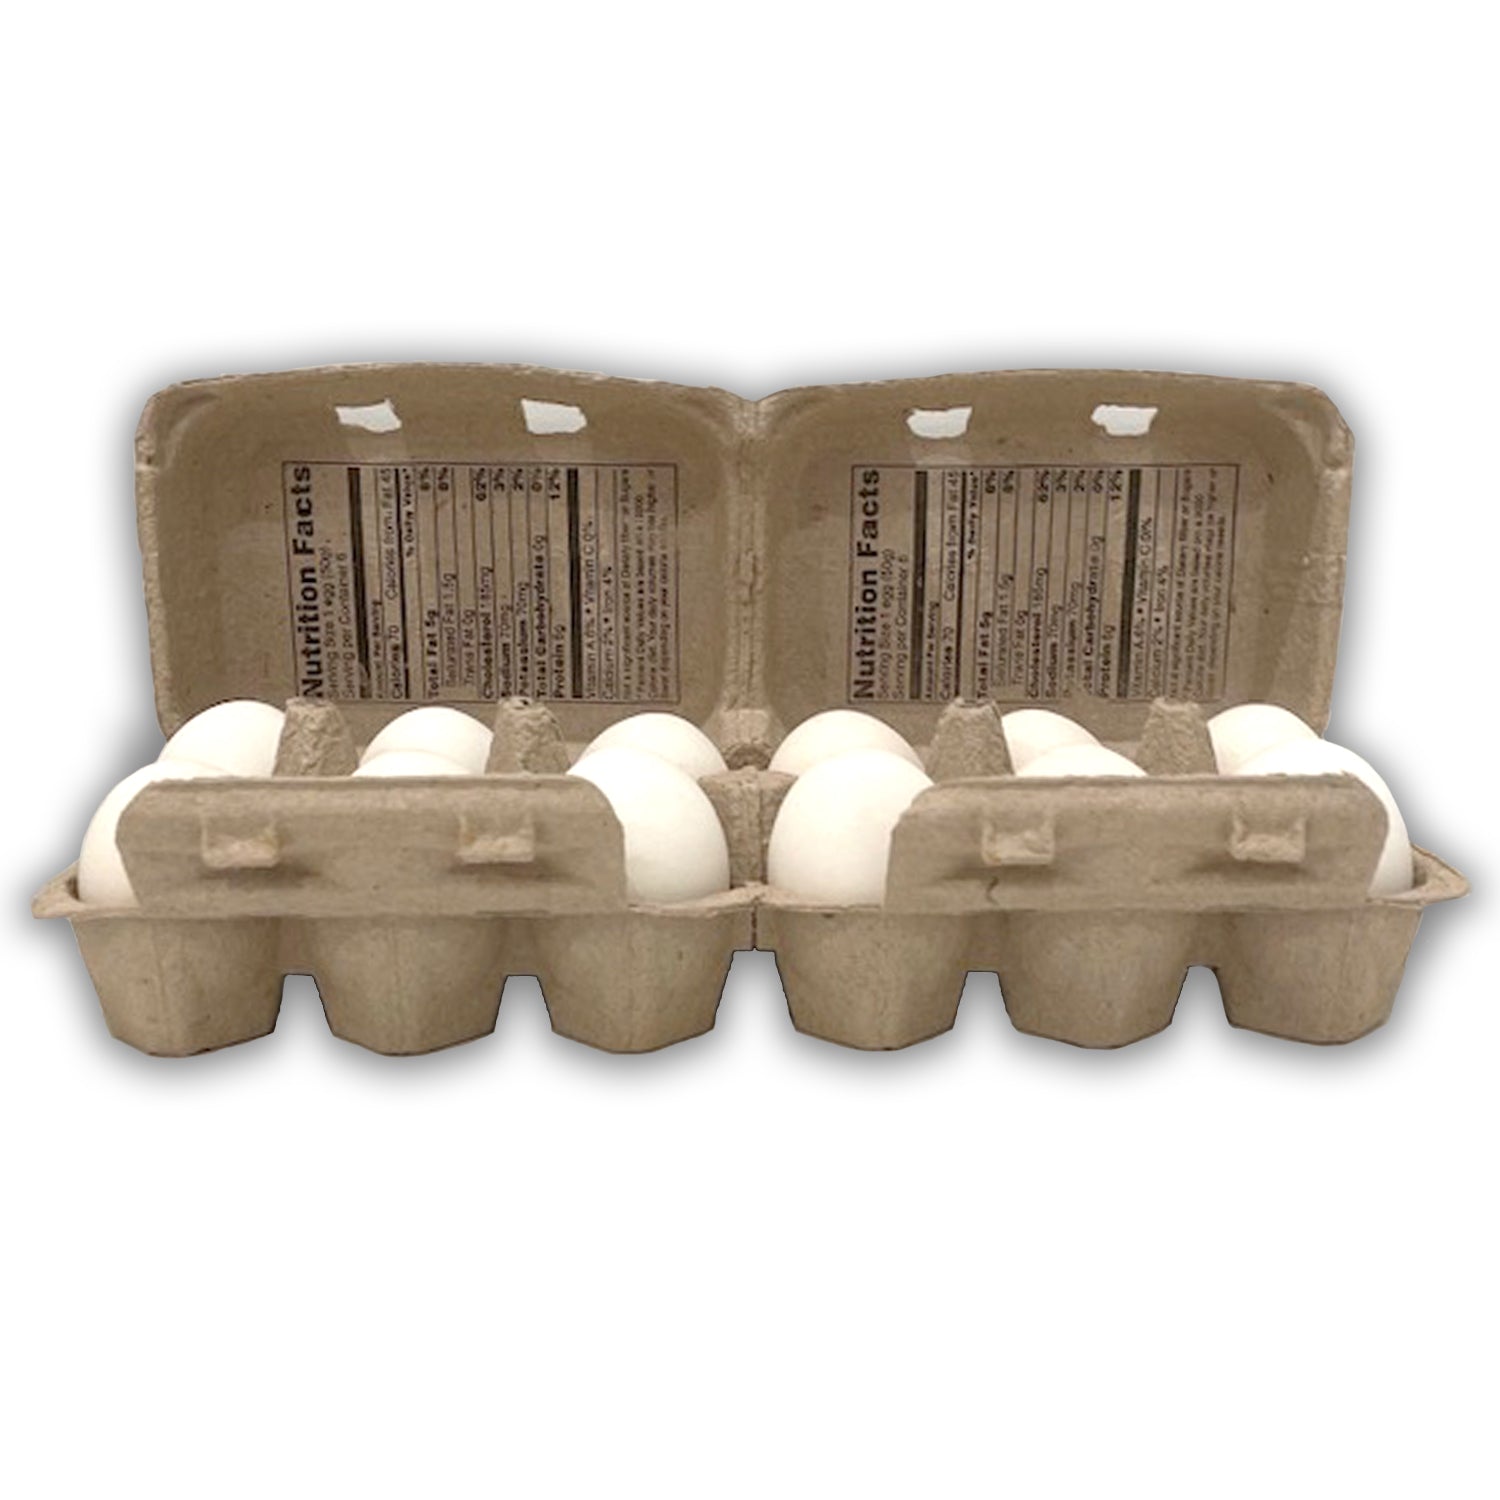 Half Dozen Egg Cartons - Henlay Blank Flat Top, Six Pack, 2 colors